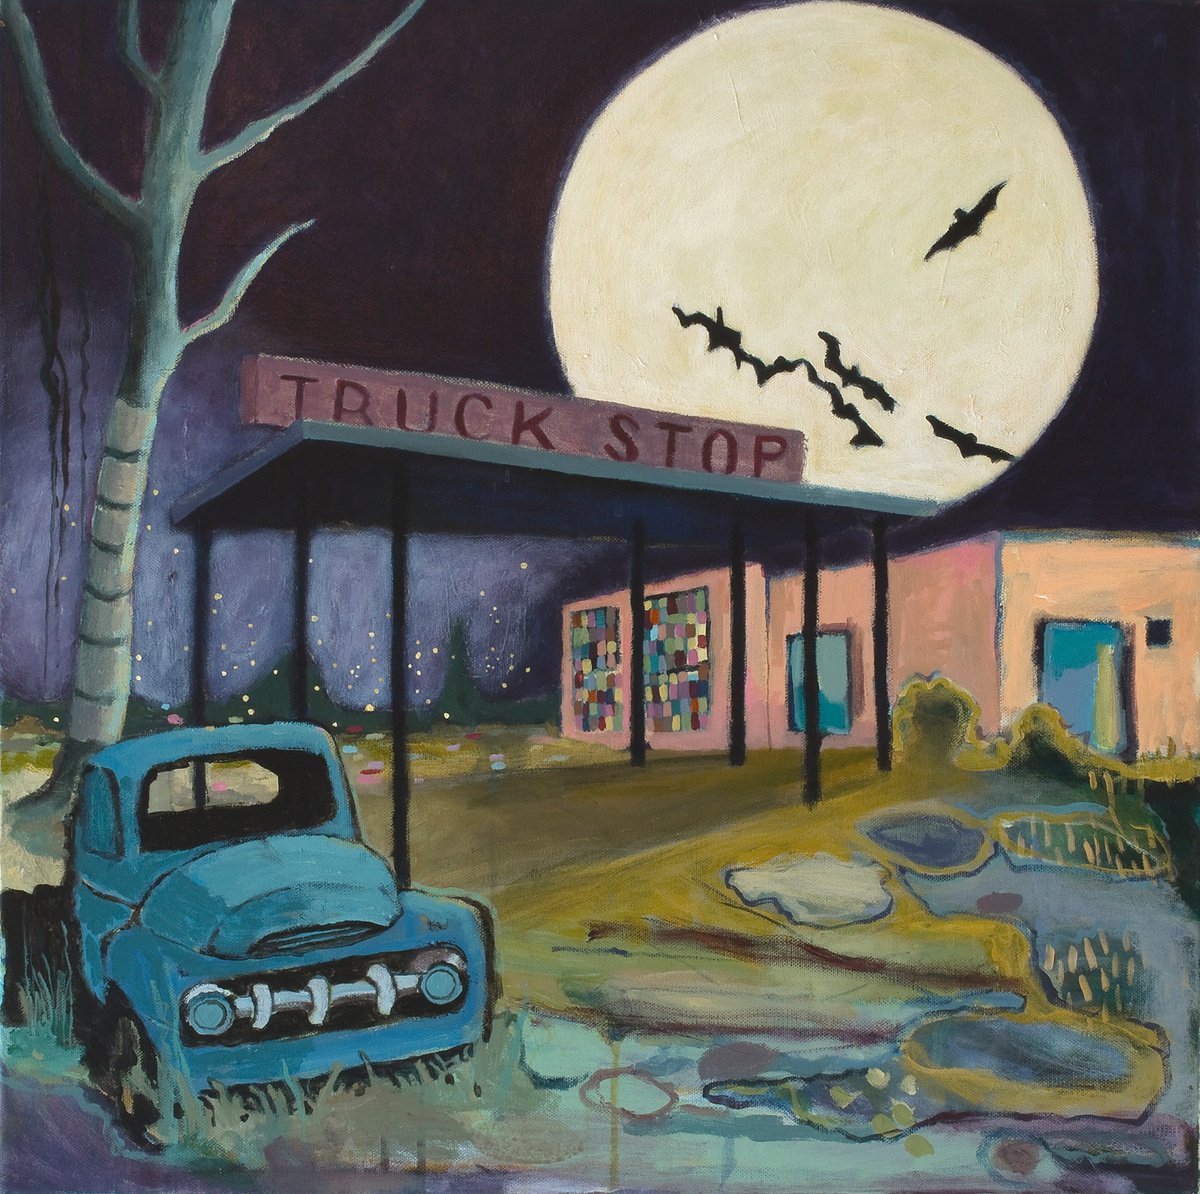 Truck Stop by Anastasia Lennon